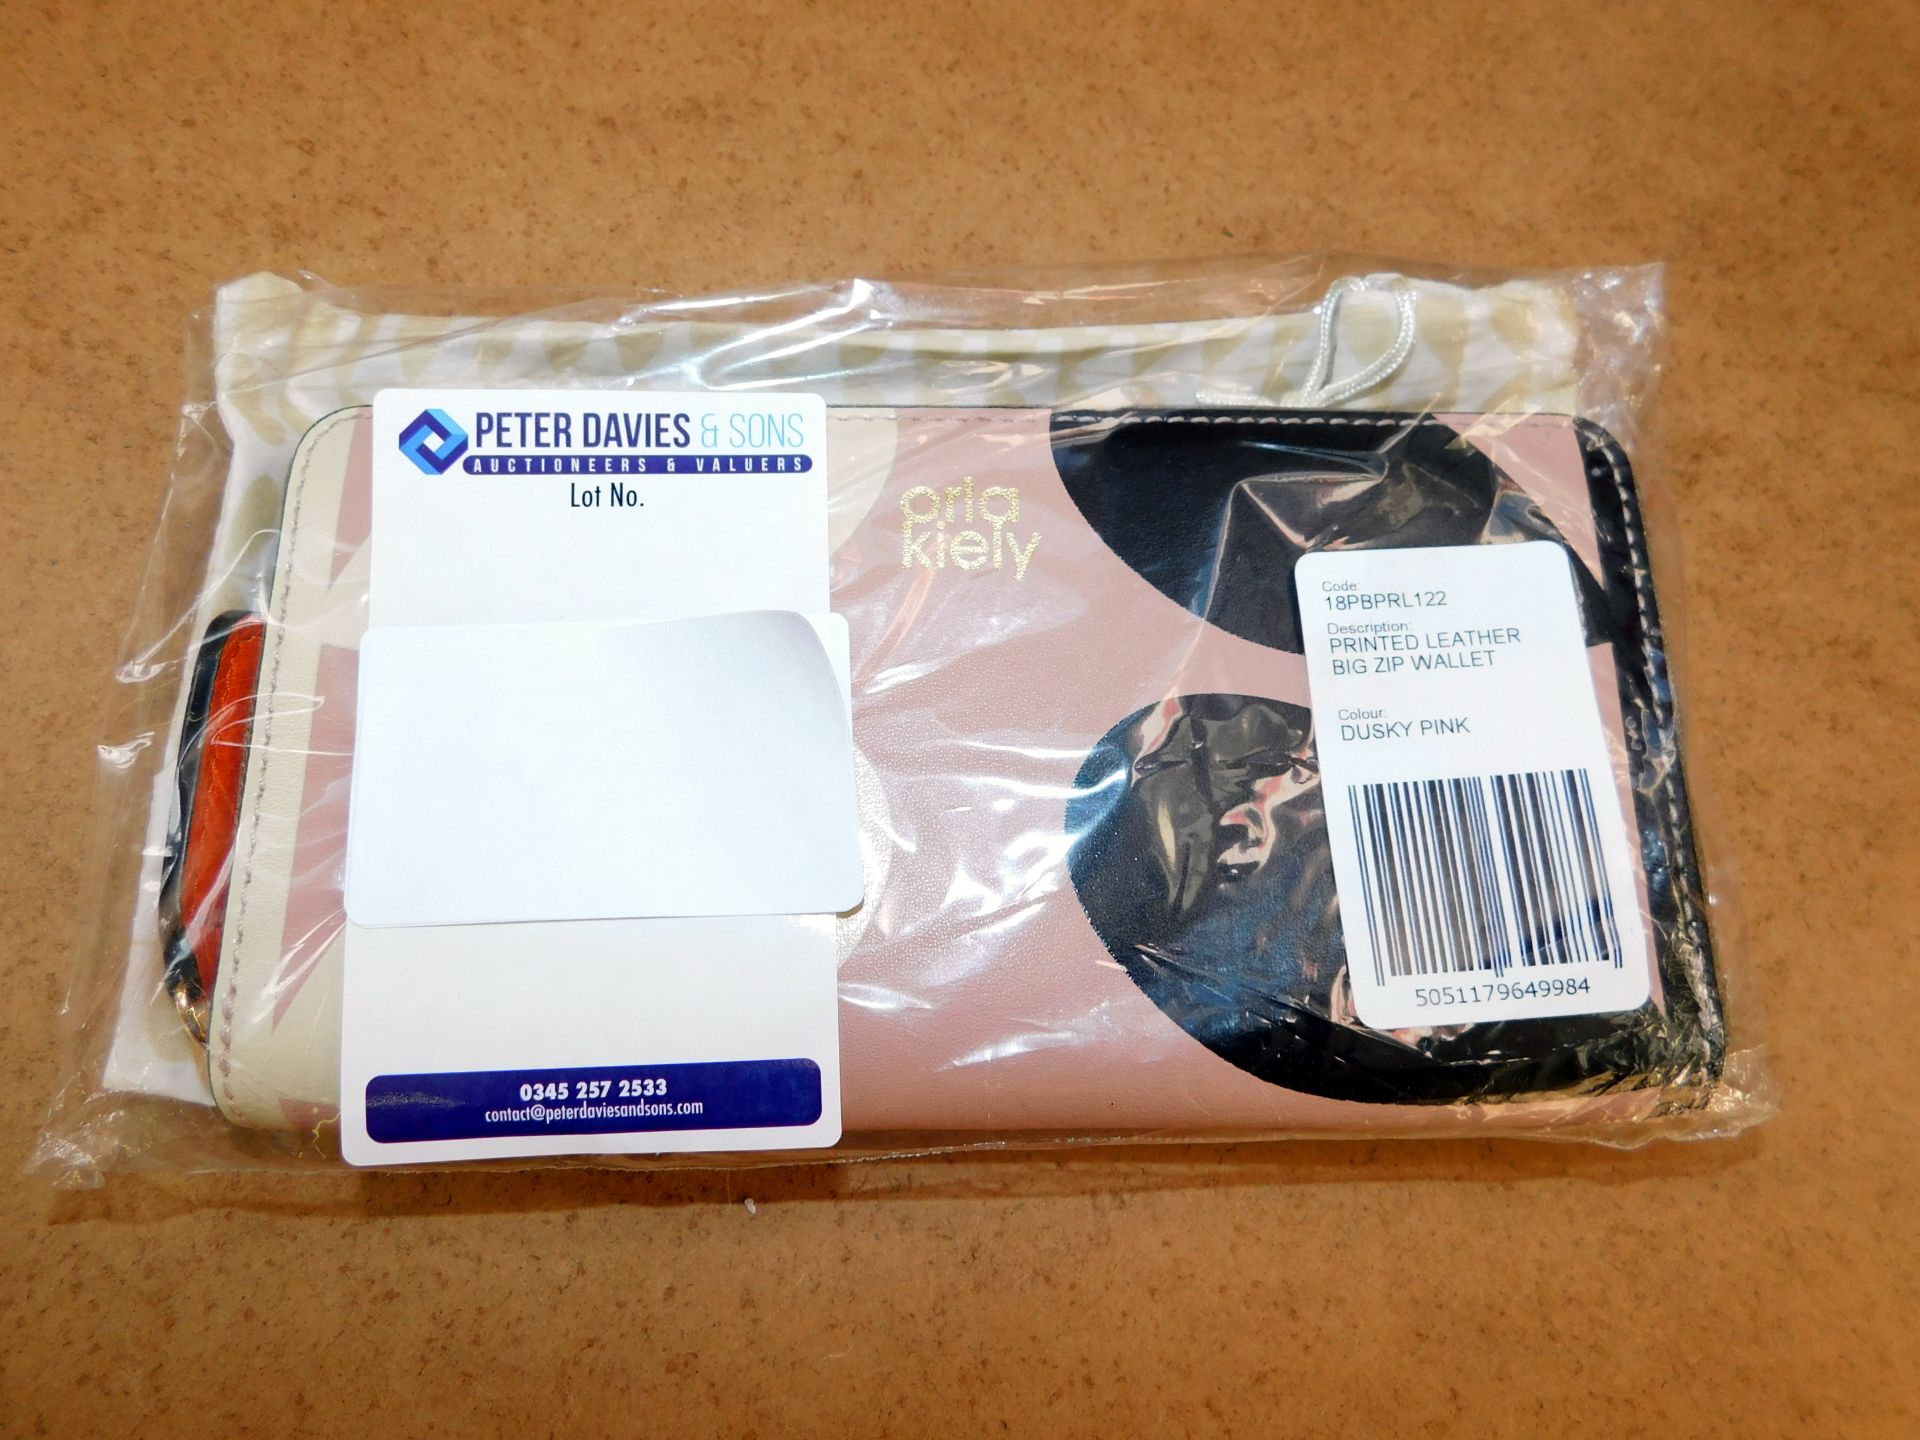 Orla Kiely Printed Leather Big Zip Wallet, Dusky Pink, RRP £165 - Image 2 of 2